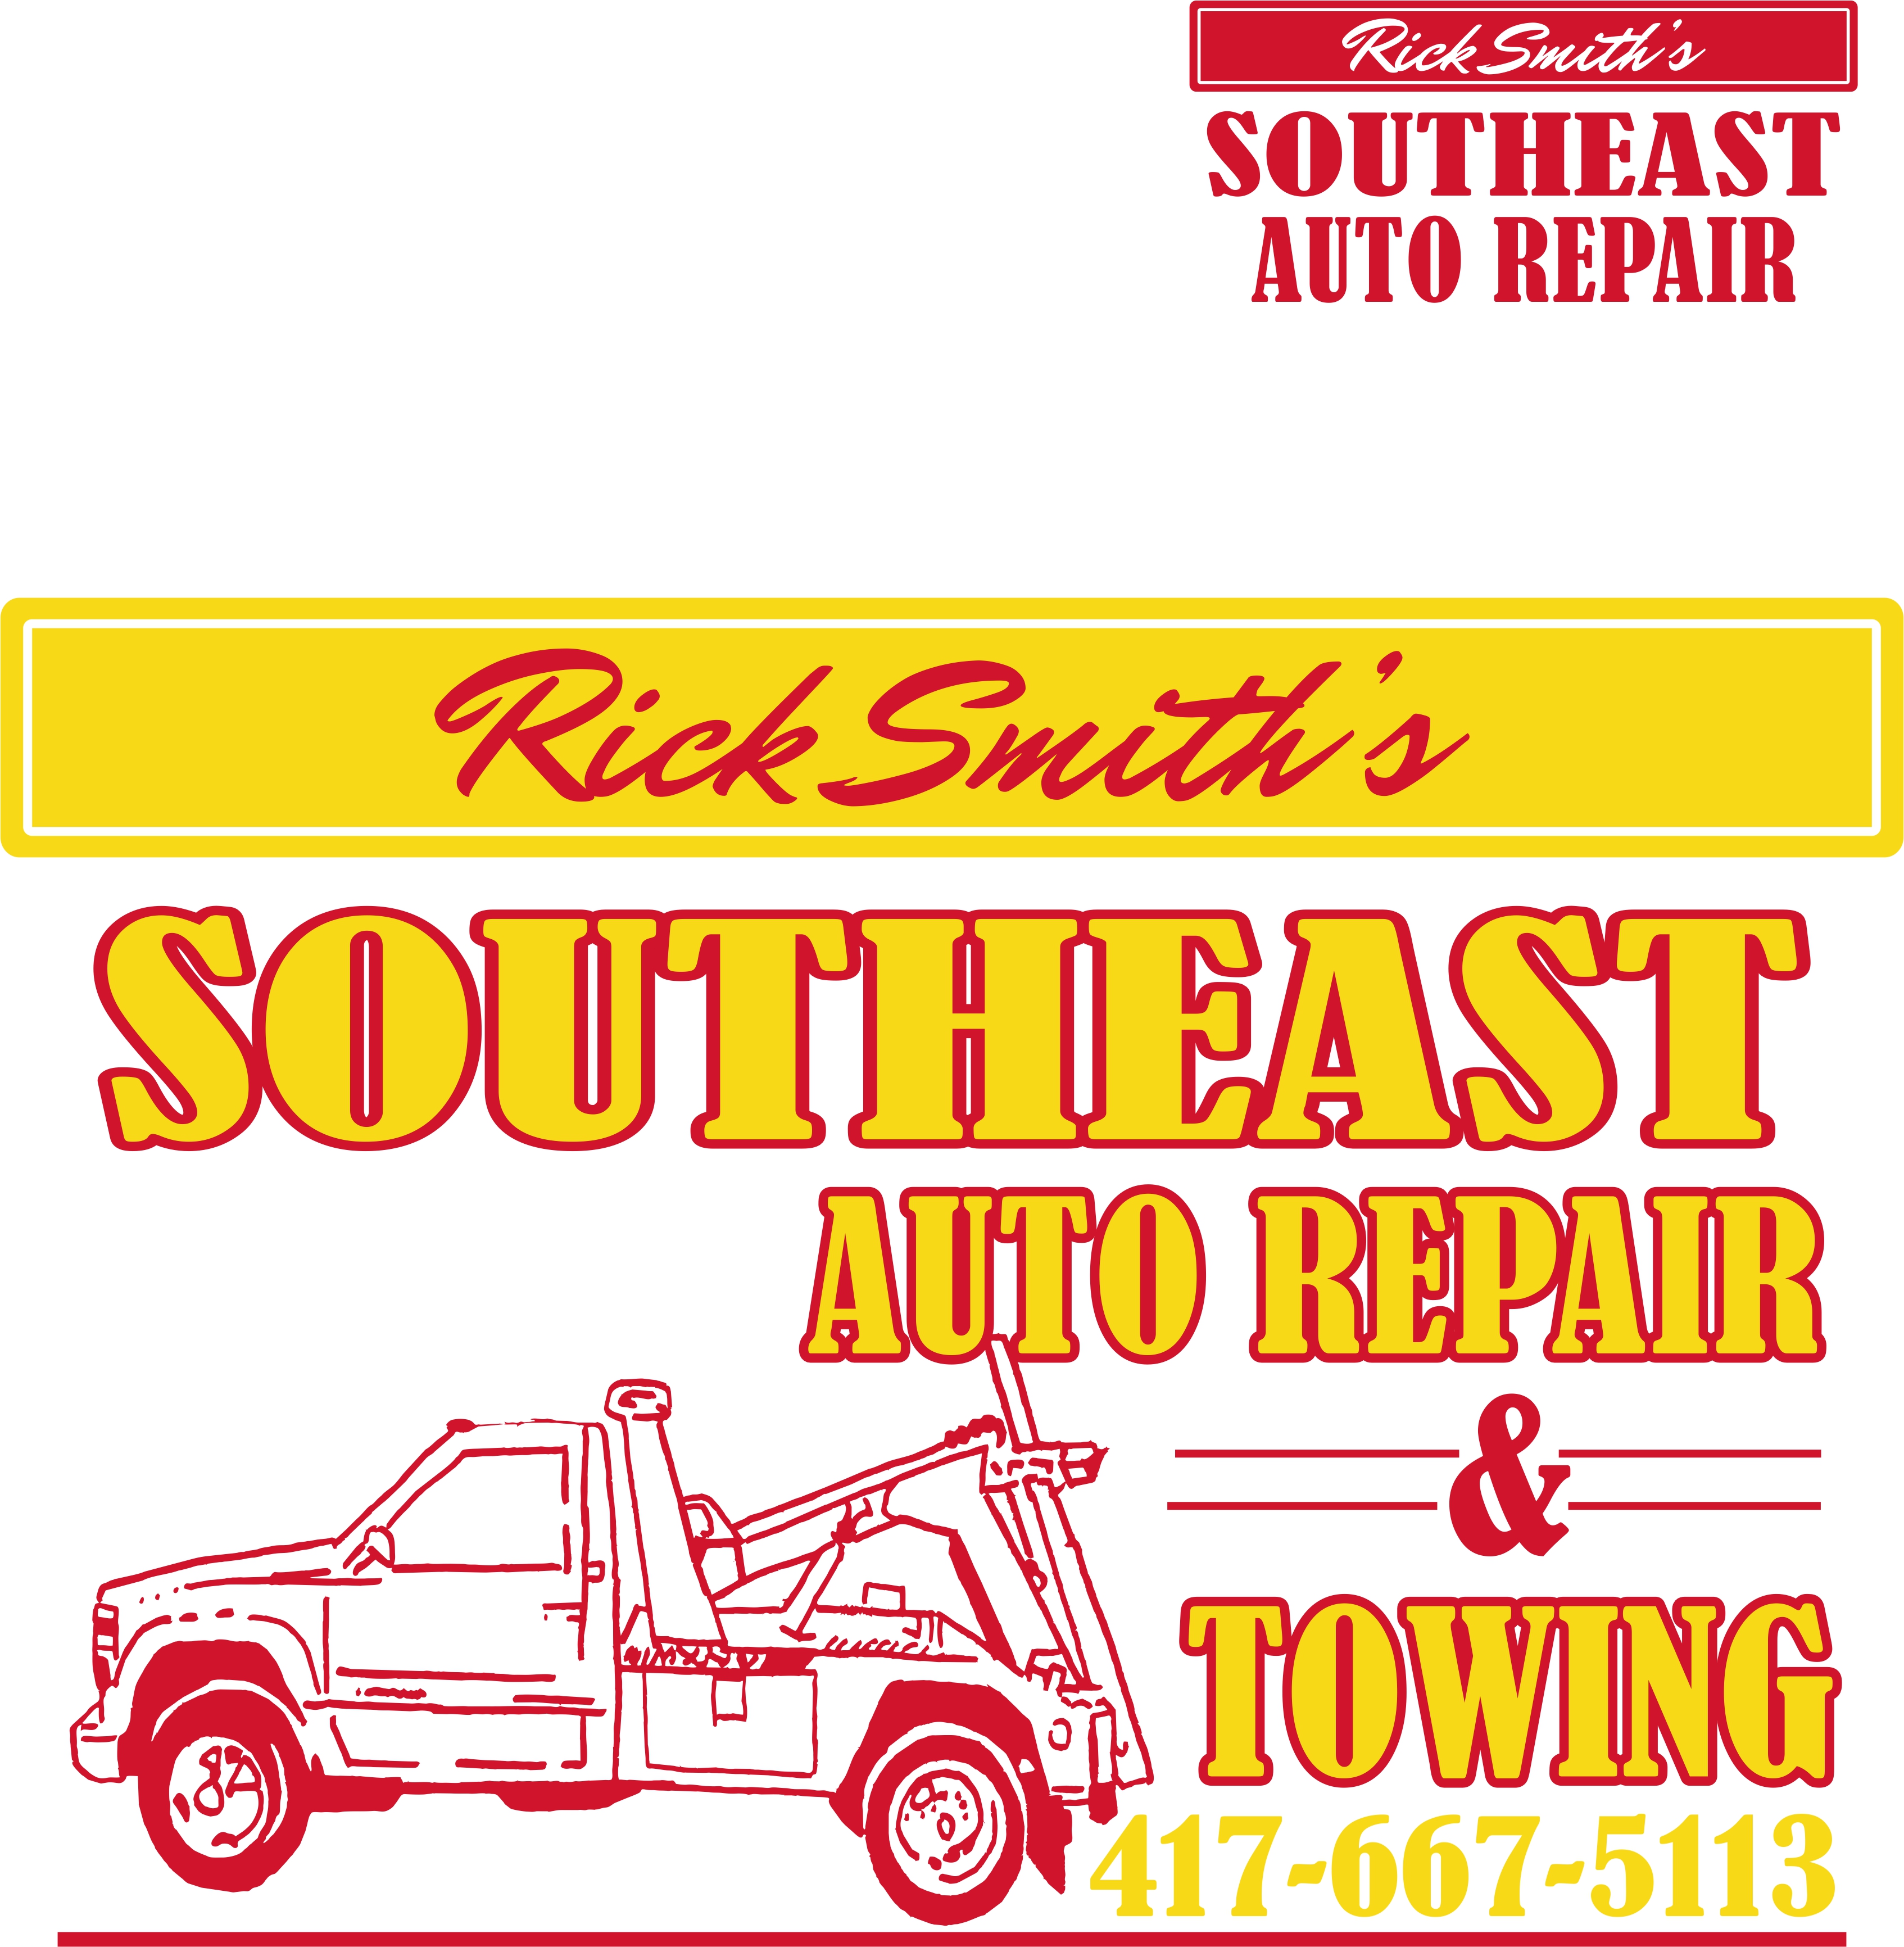 Rick Smith's Southeast Auto Repair